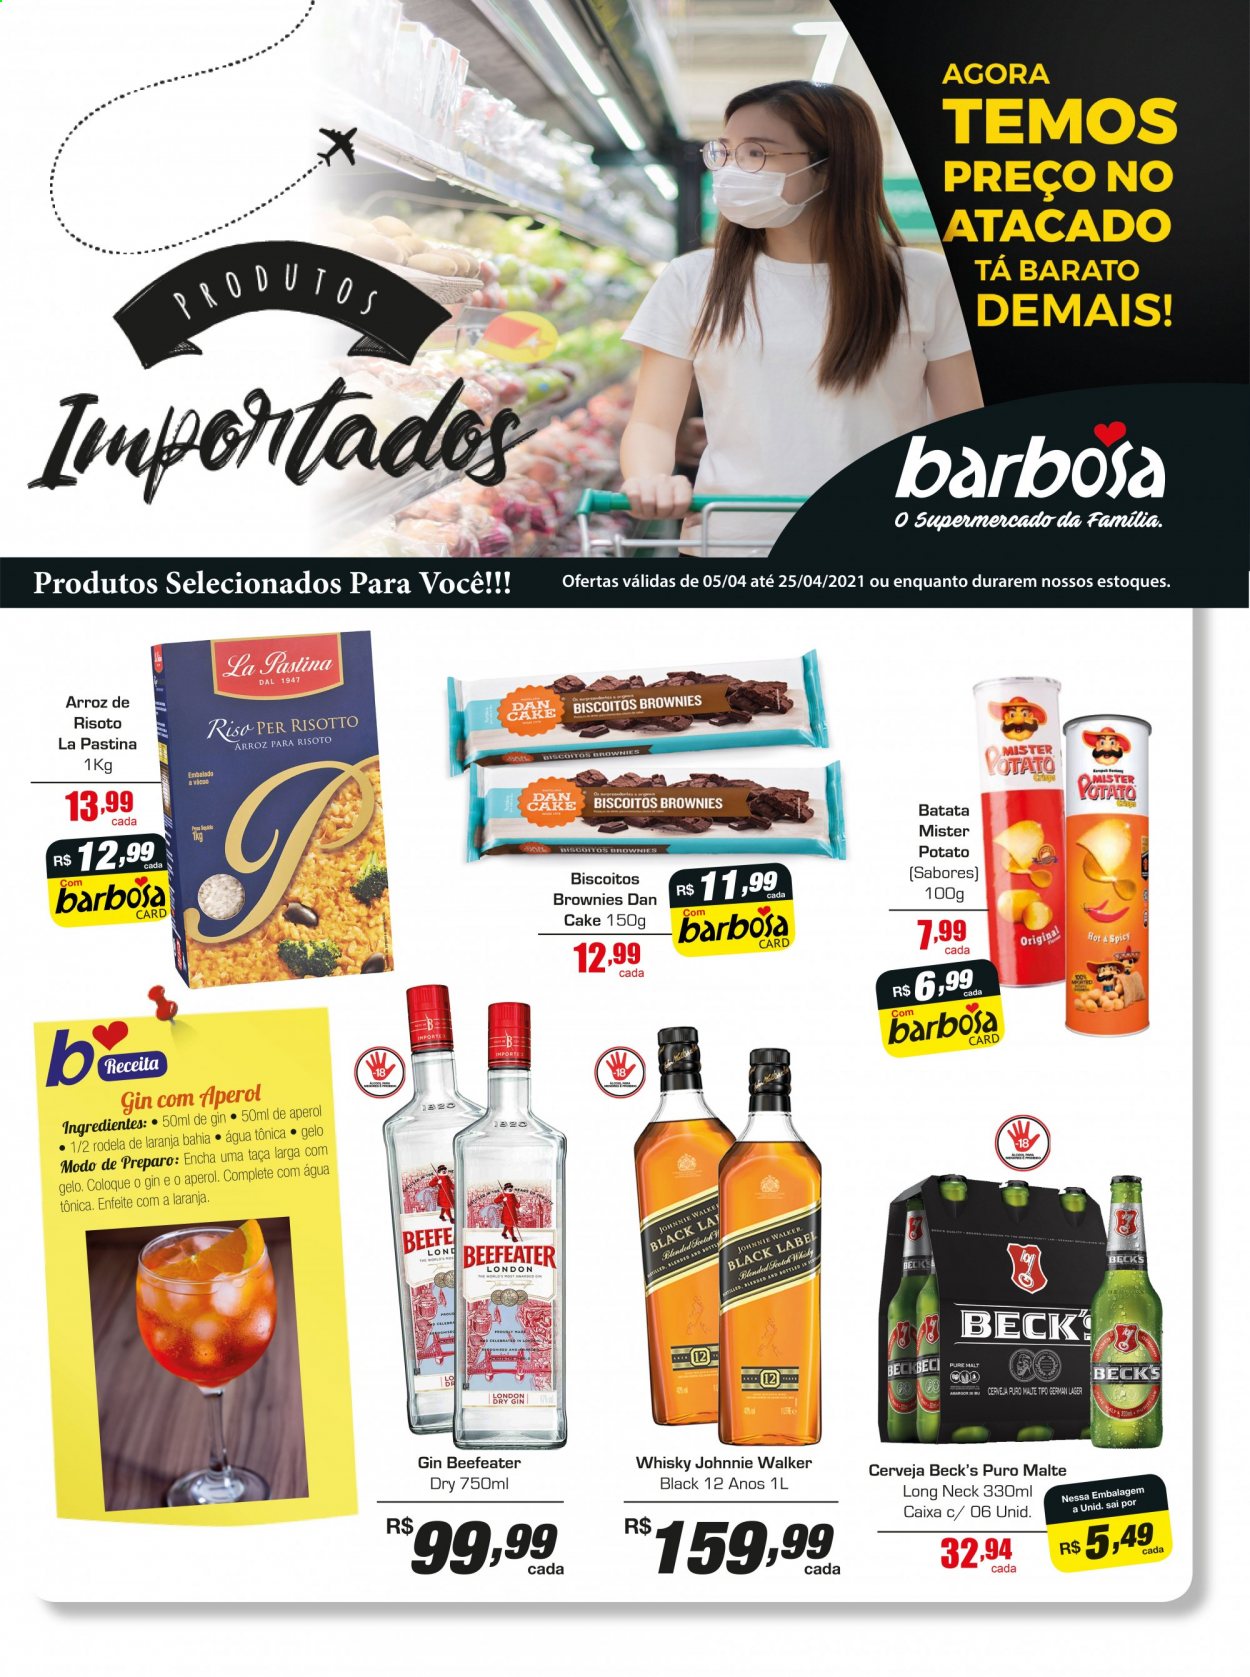 Encarte Barbosa Supermercados  - 05.04.2021 - 25.04.2021.